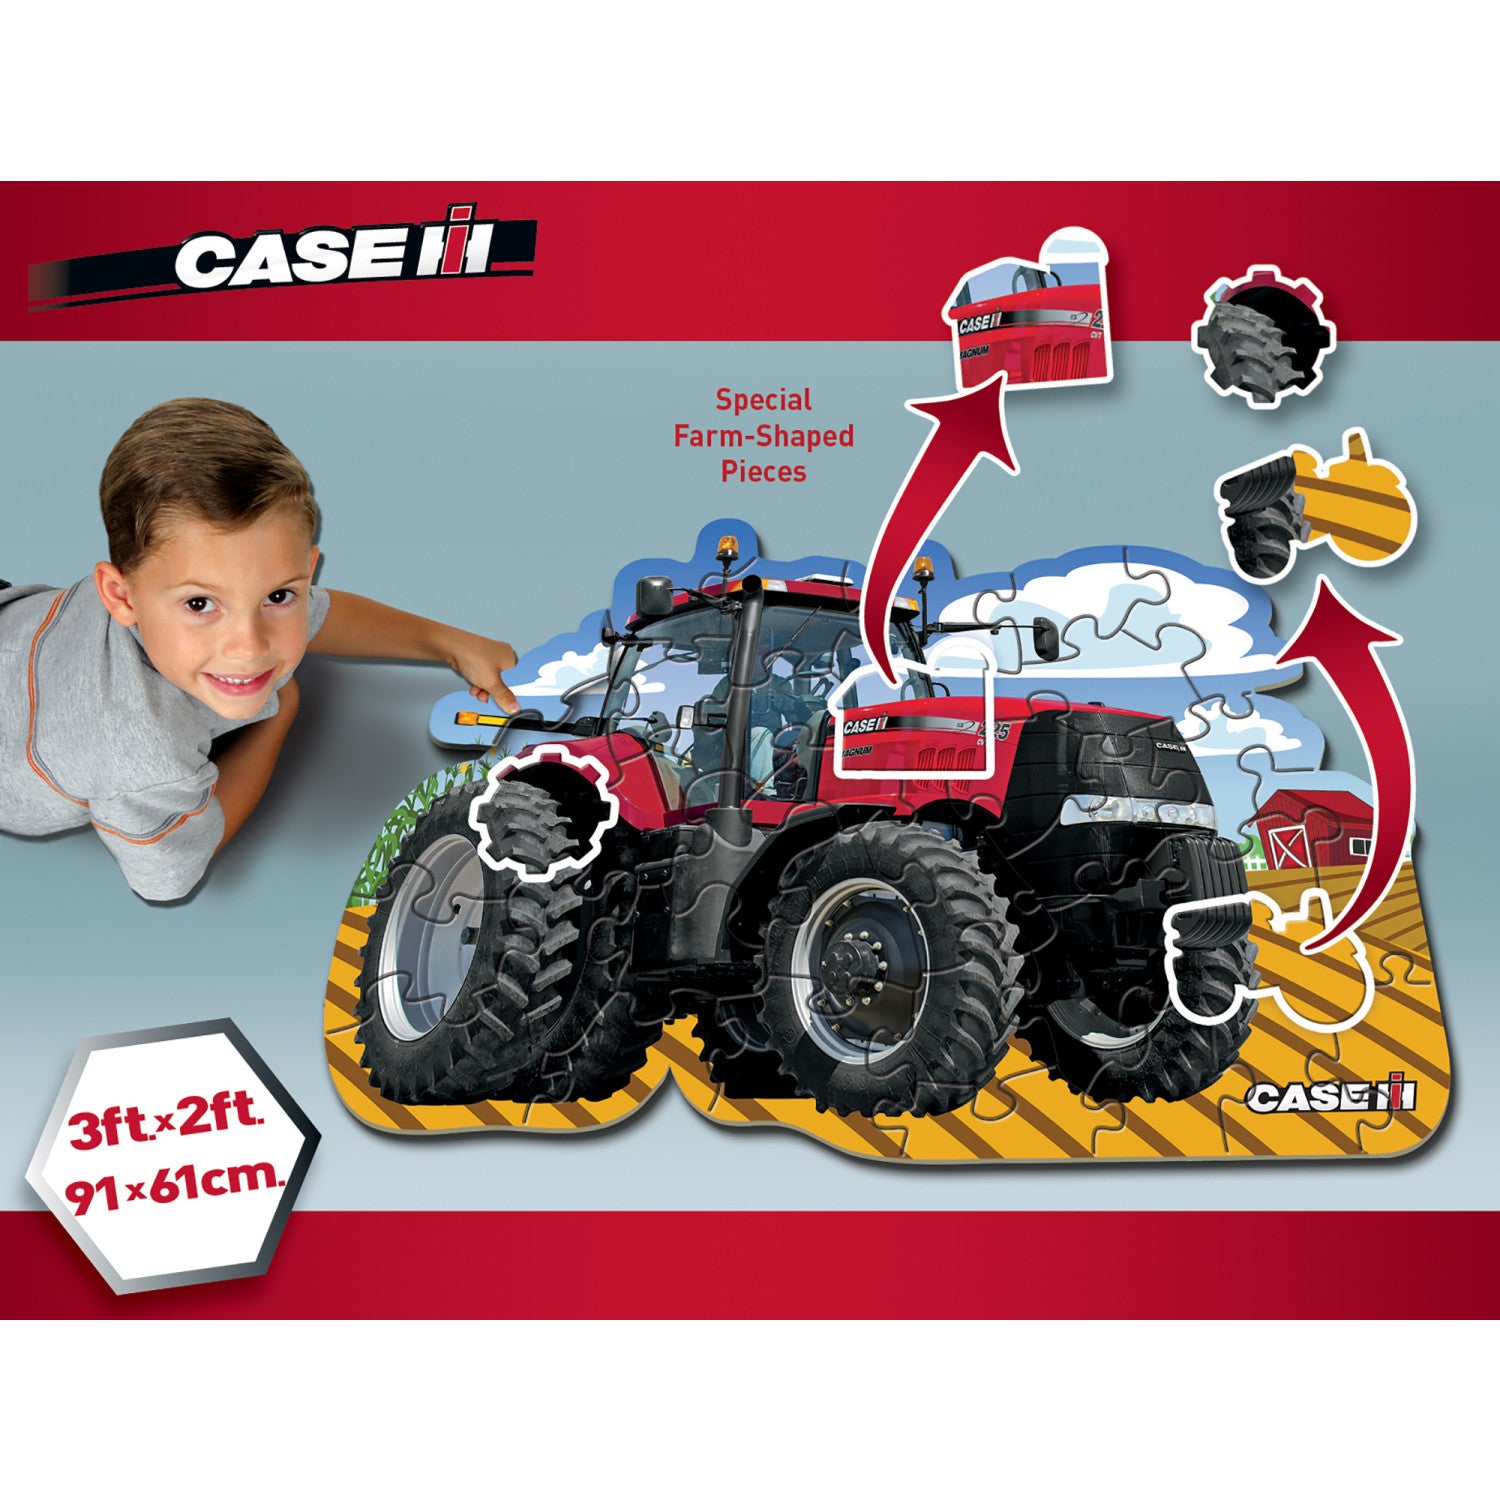 Case IH - Tractor 36 Piece Floor Jigsaw Puzzle